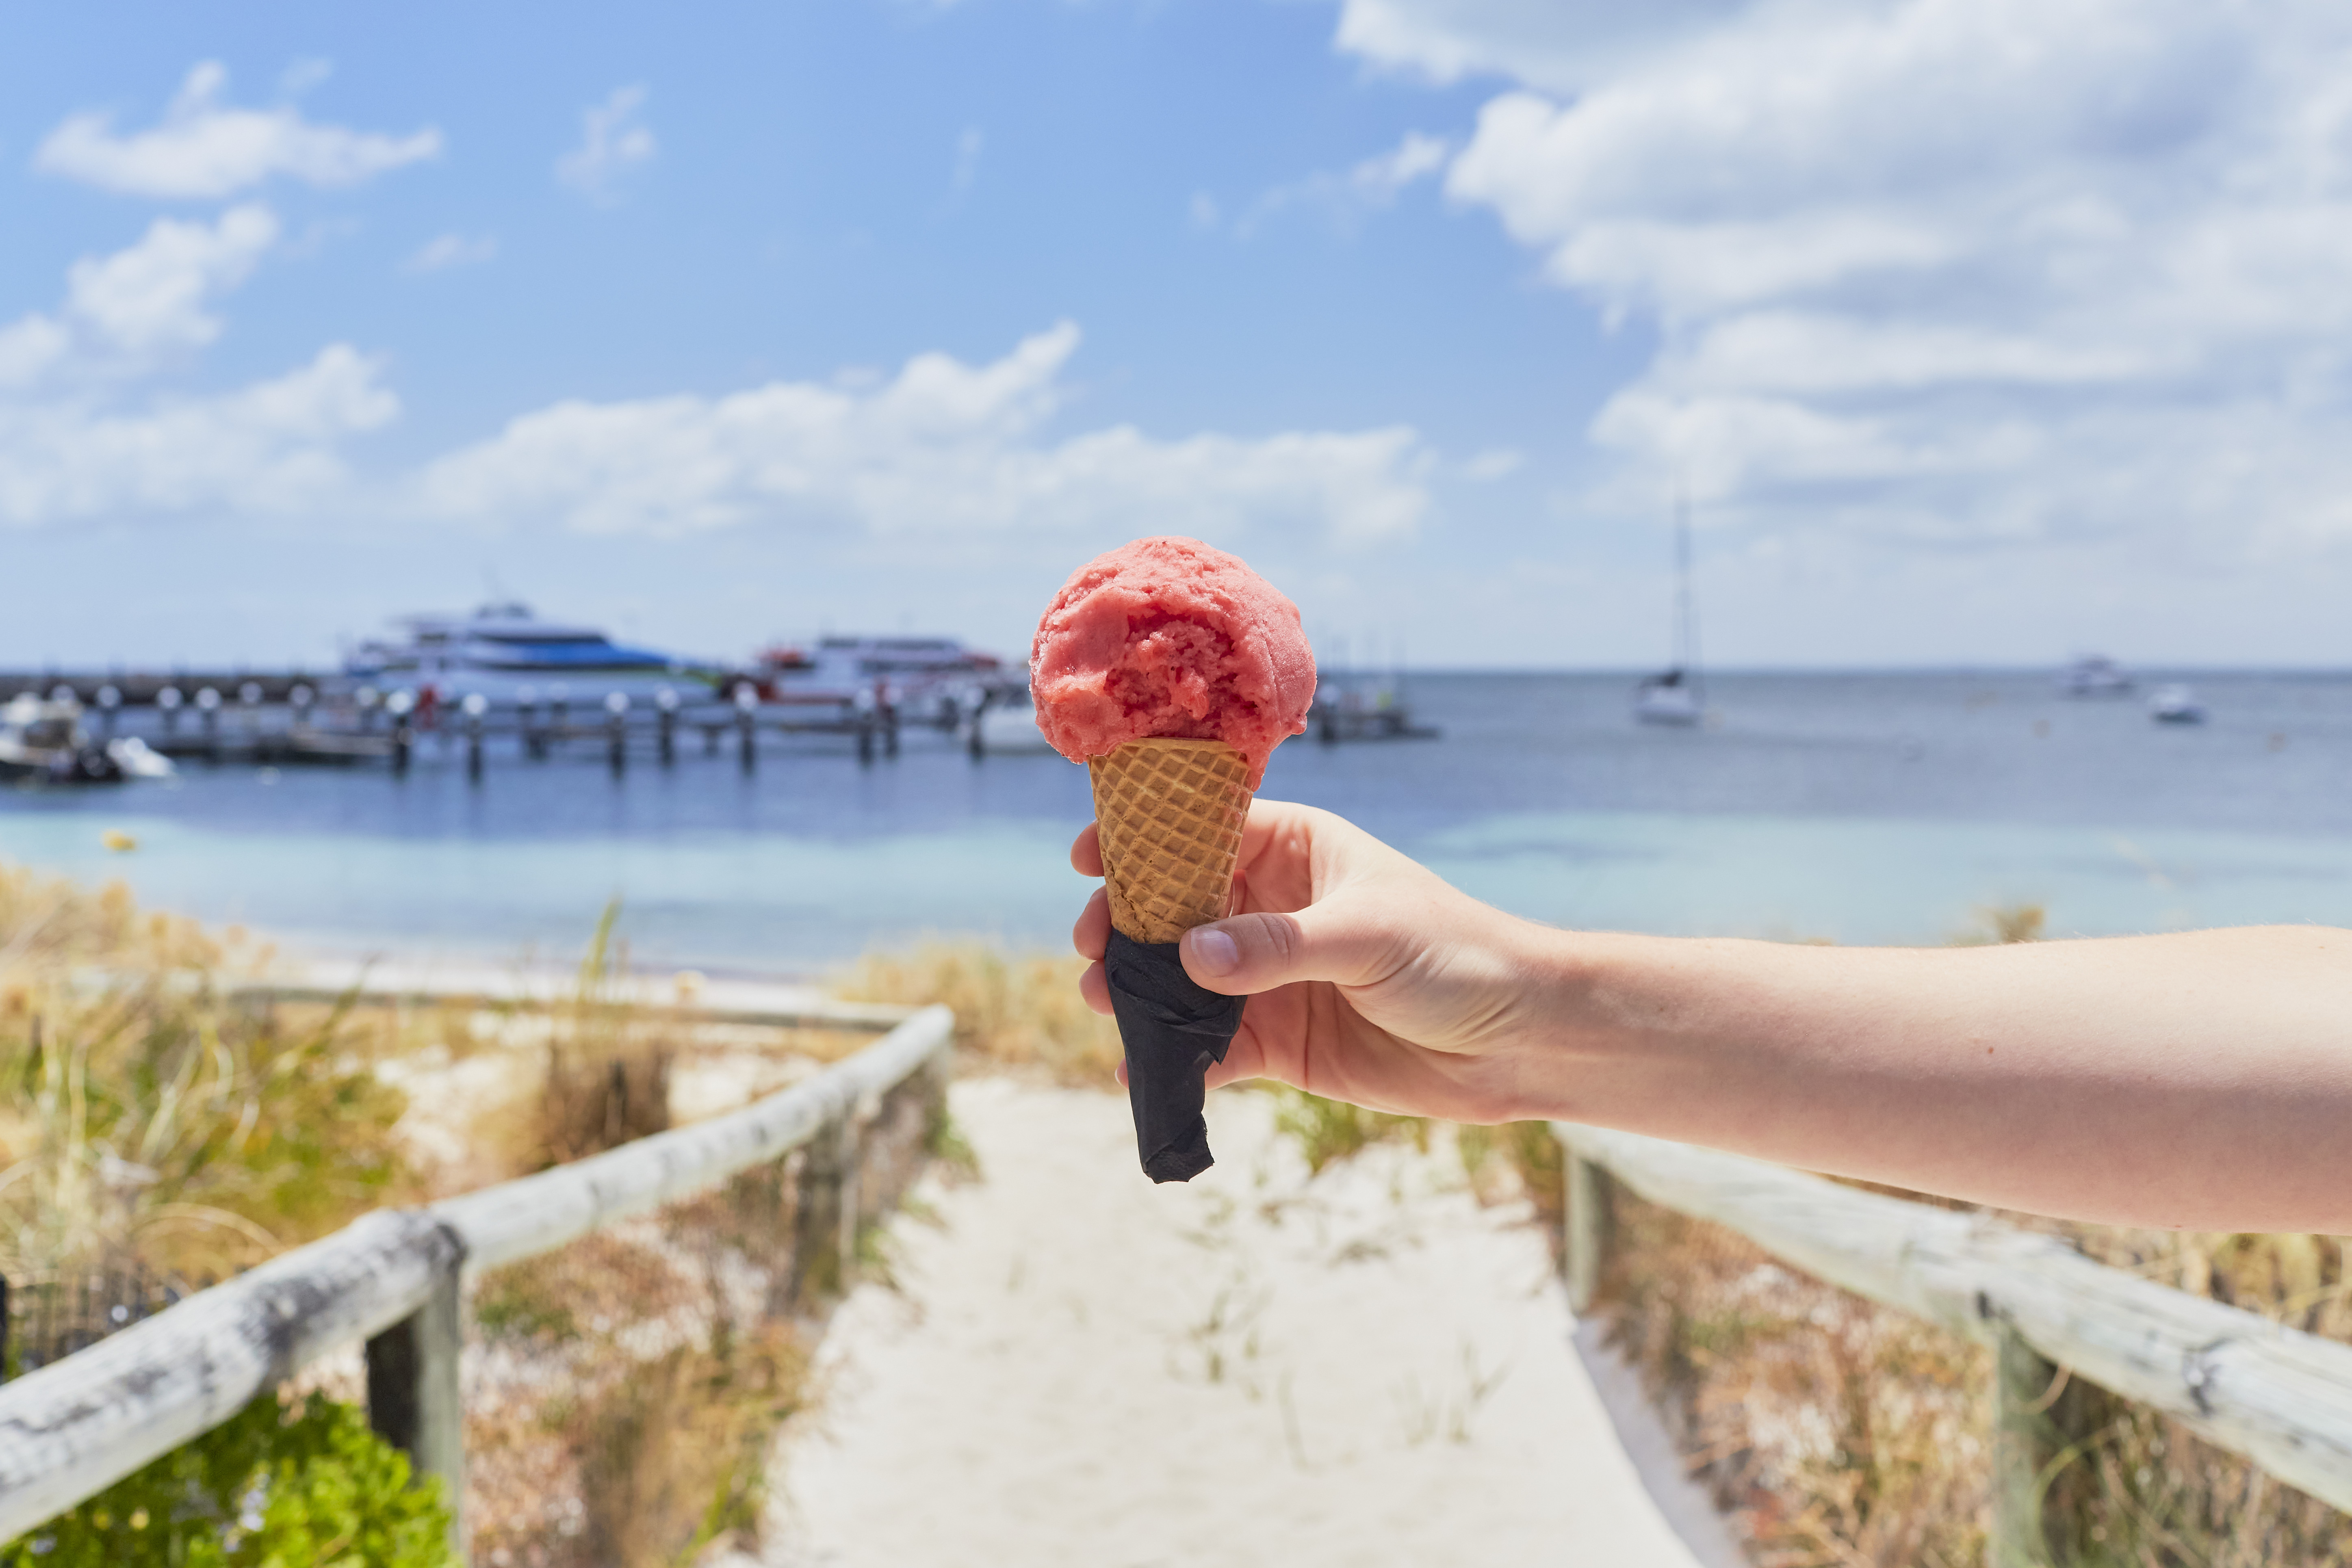 Ice cream at Thomson bay